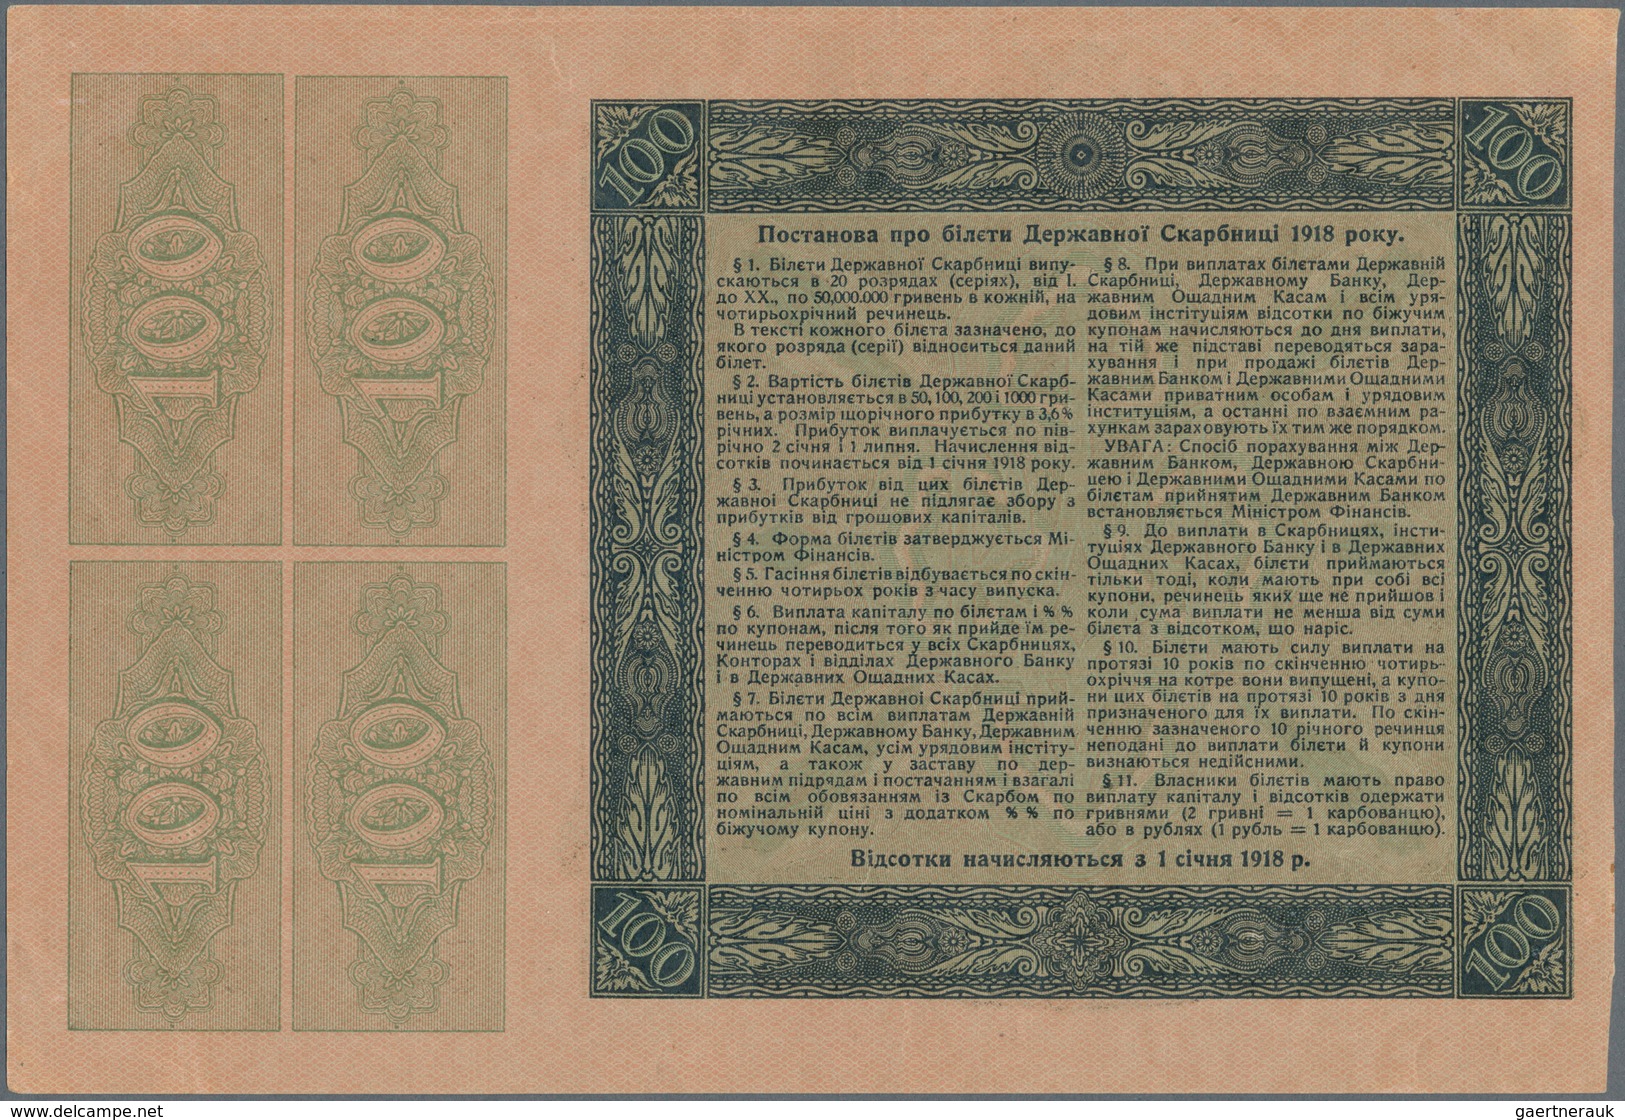 Ukraina / Ukraine: 100 Hriven 1918 "3.6% Bond" Certificates Issue, P.13 With 4 Cupons Of 1 Hriven 80 - Oekraïne